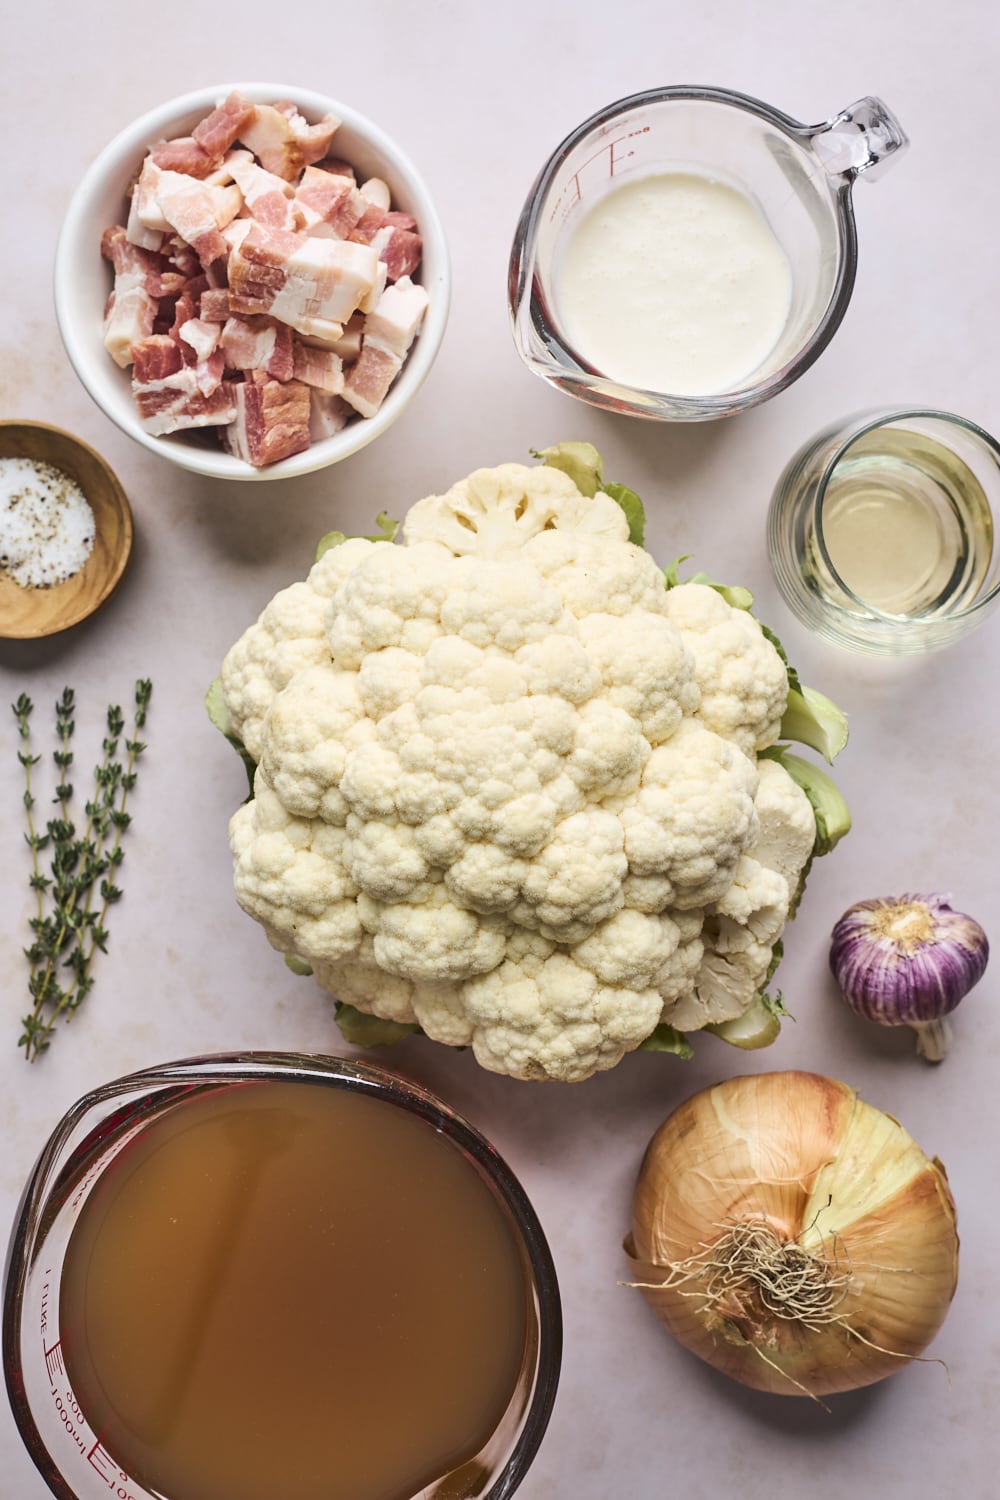 Creamy Cauliflower Soup